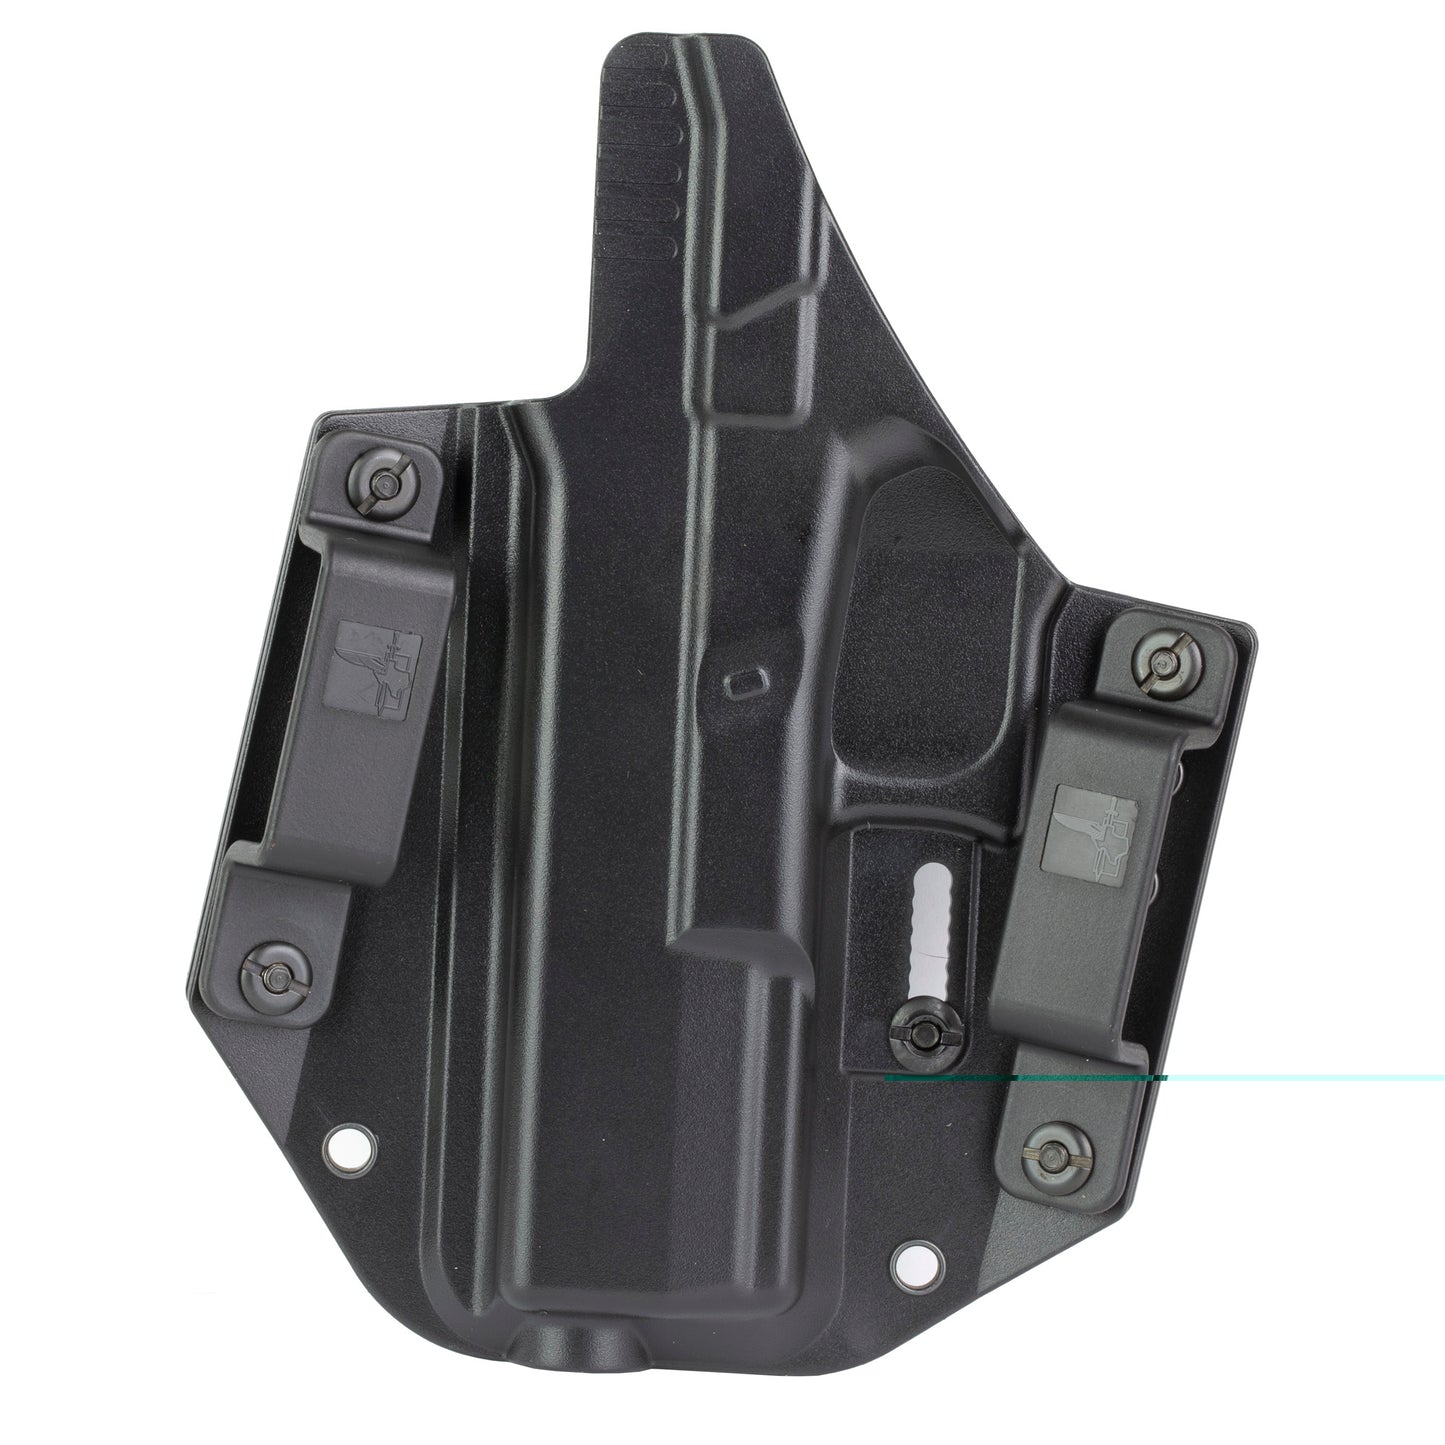 Bravo Concealment, BCA, OWB Concealment Holster, 1.5" Belt Loops, Fits Glock 17/31/32/47, Right Hand, Black, Polymer, Does not fit Glock Gen 5 40SW